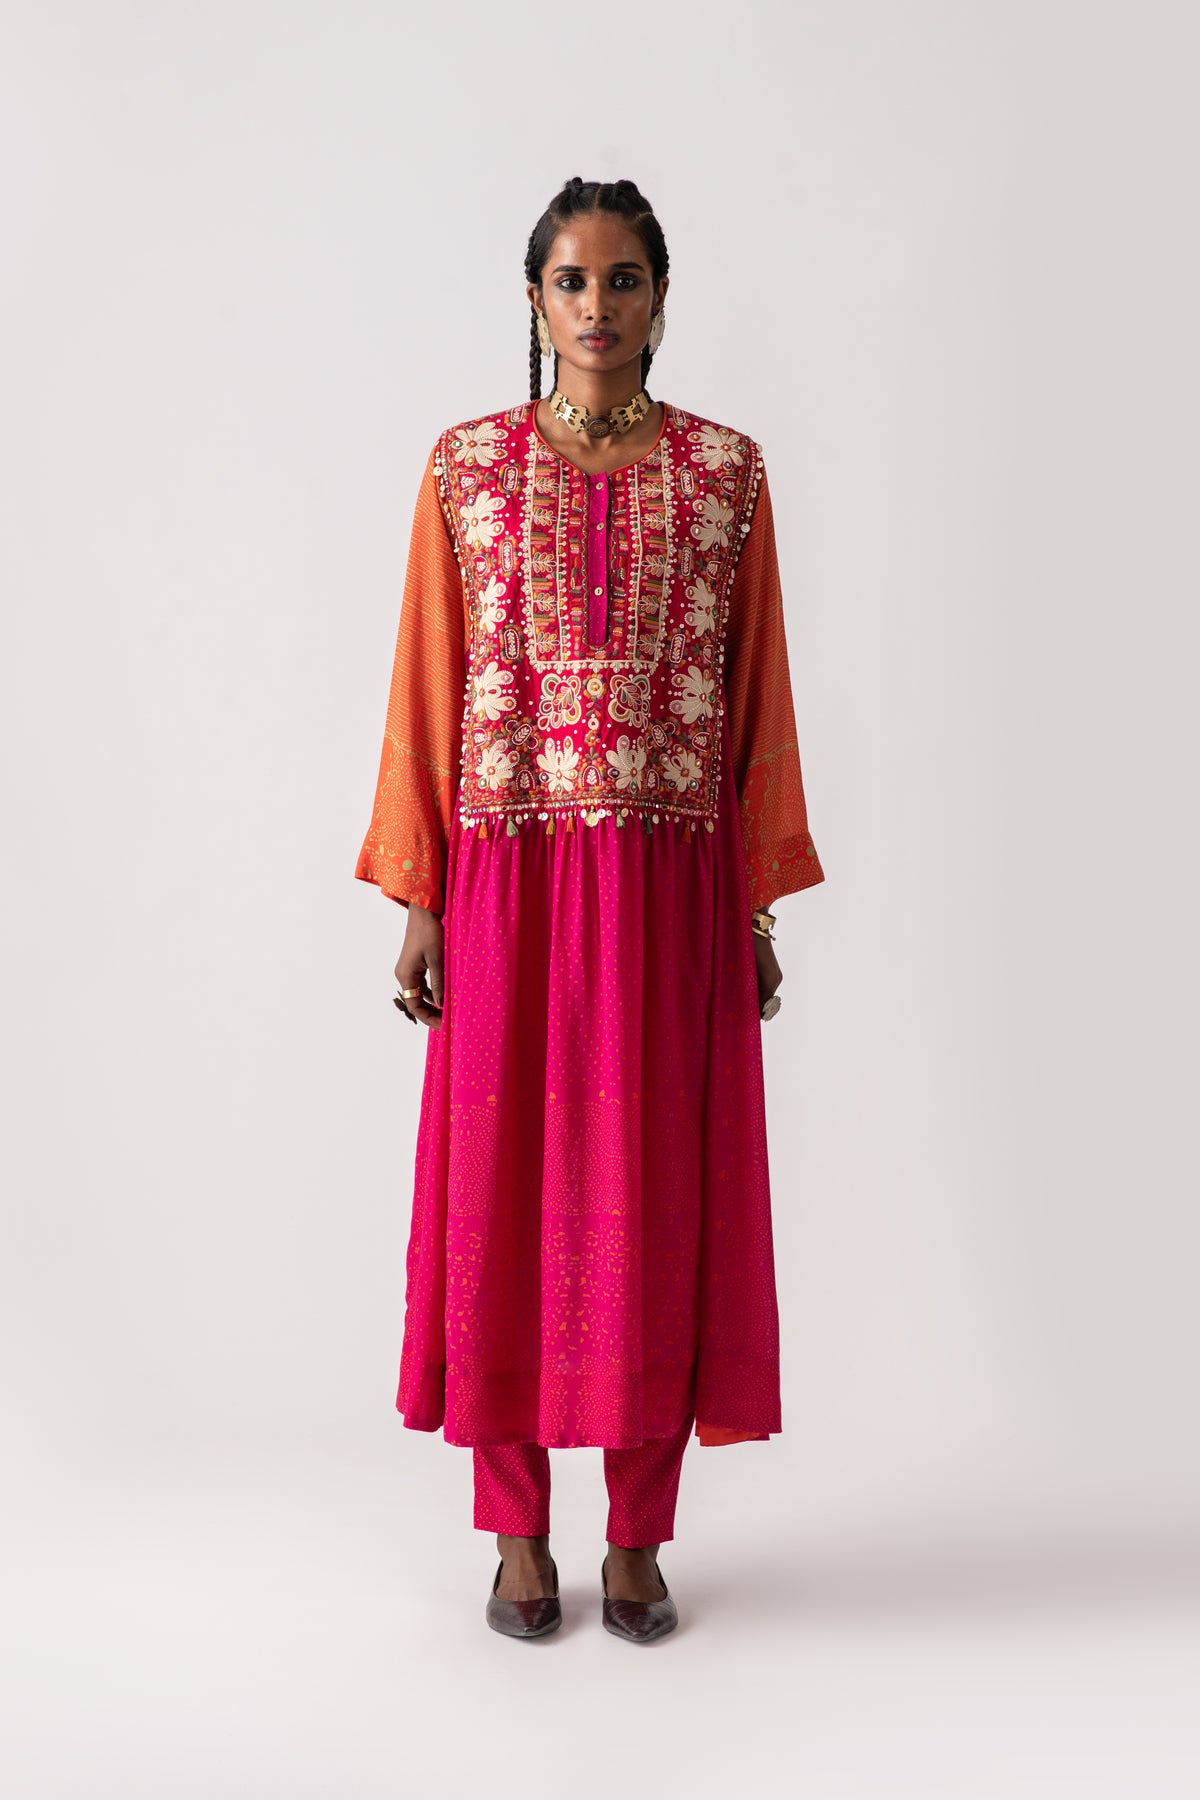 Sindhu afgan tunic with vipasa slim trouser